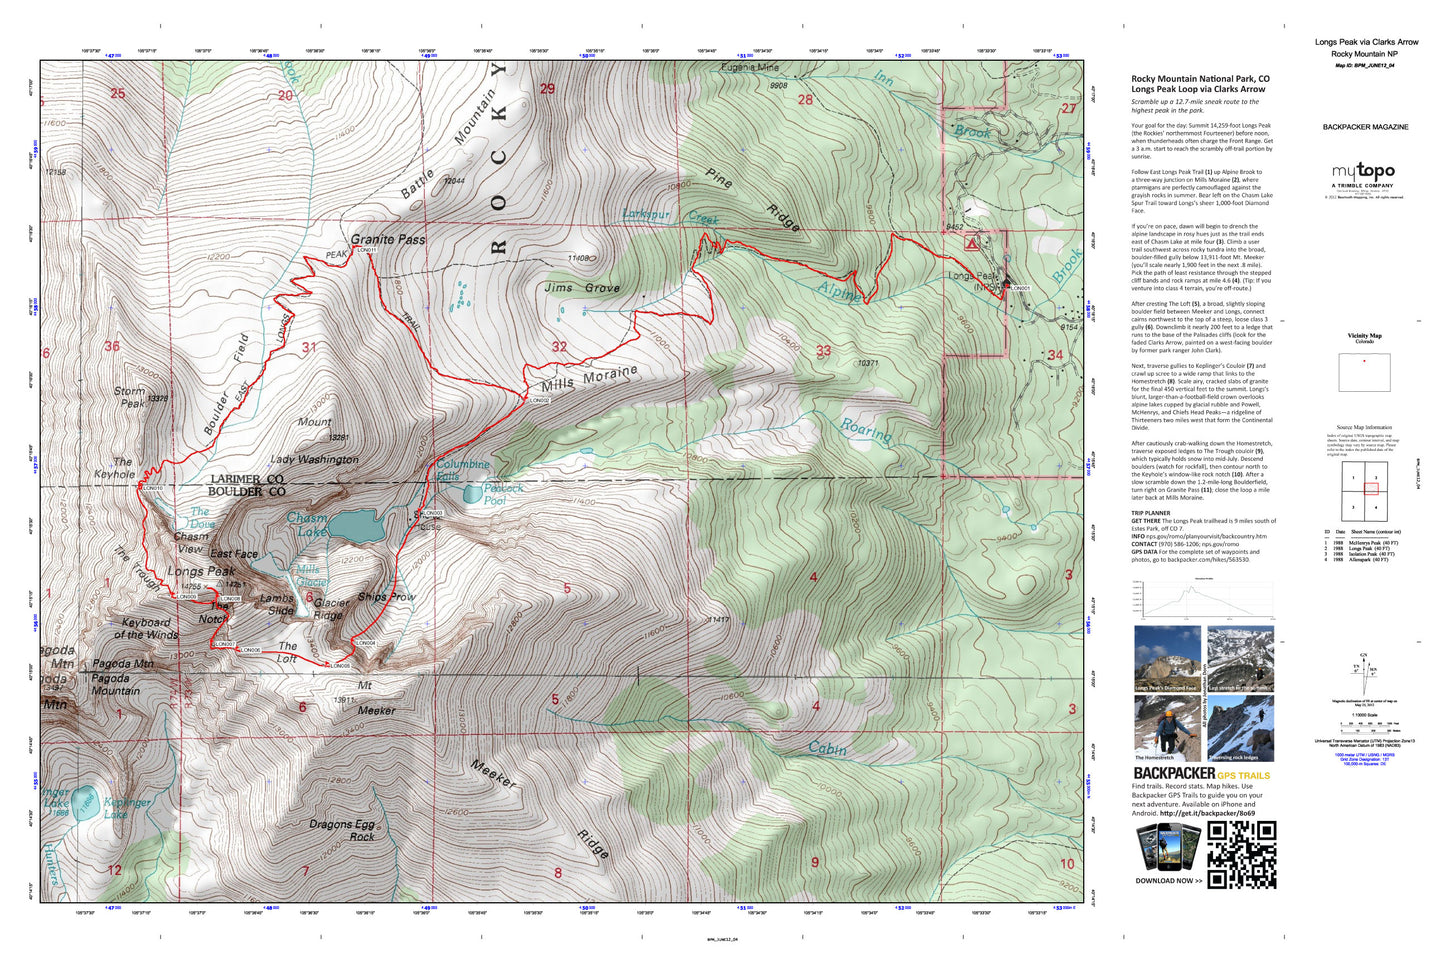 Longs Peak via Clarks Arrow Map (Rocky Mountain NP, Colorado) Image